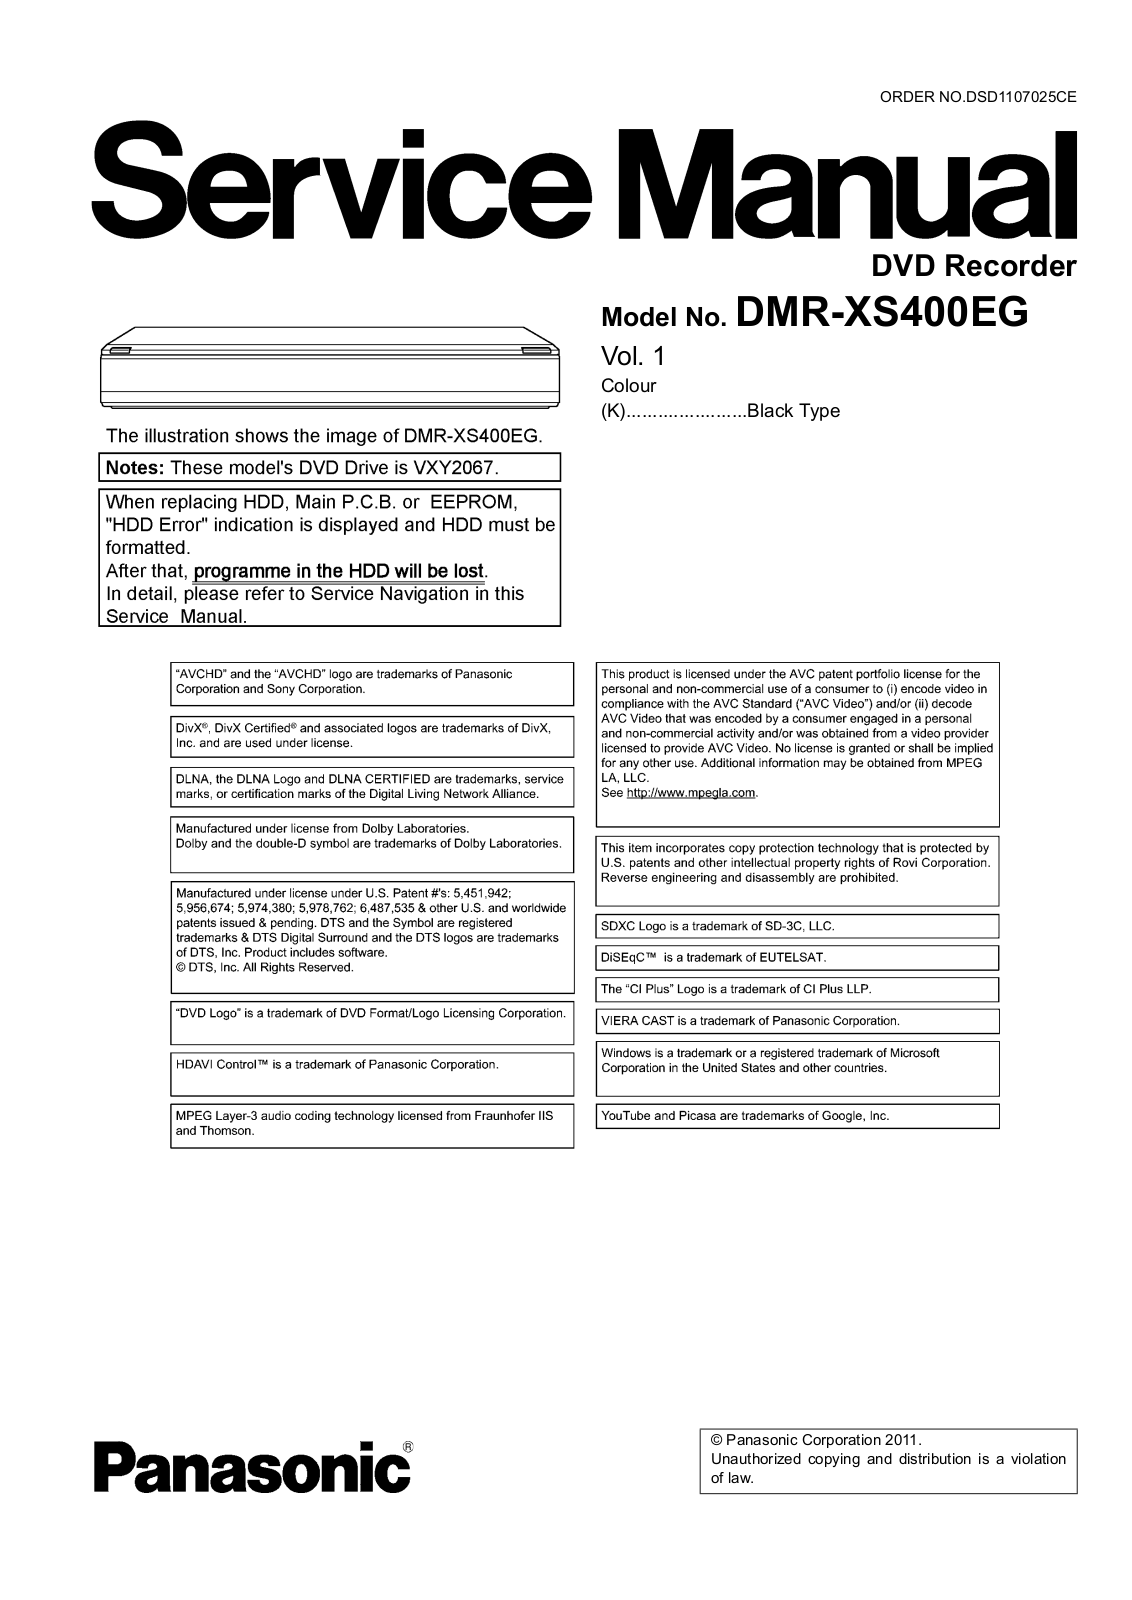 Panasonic DMR-XS400EG Service Manual